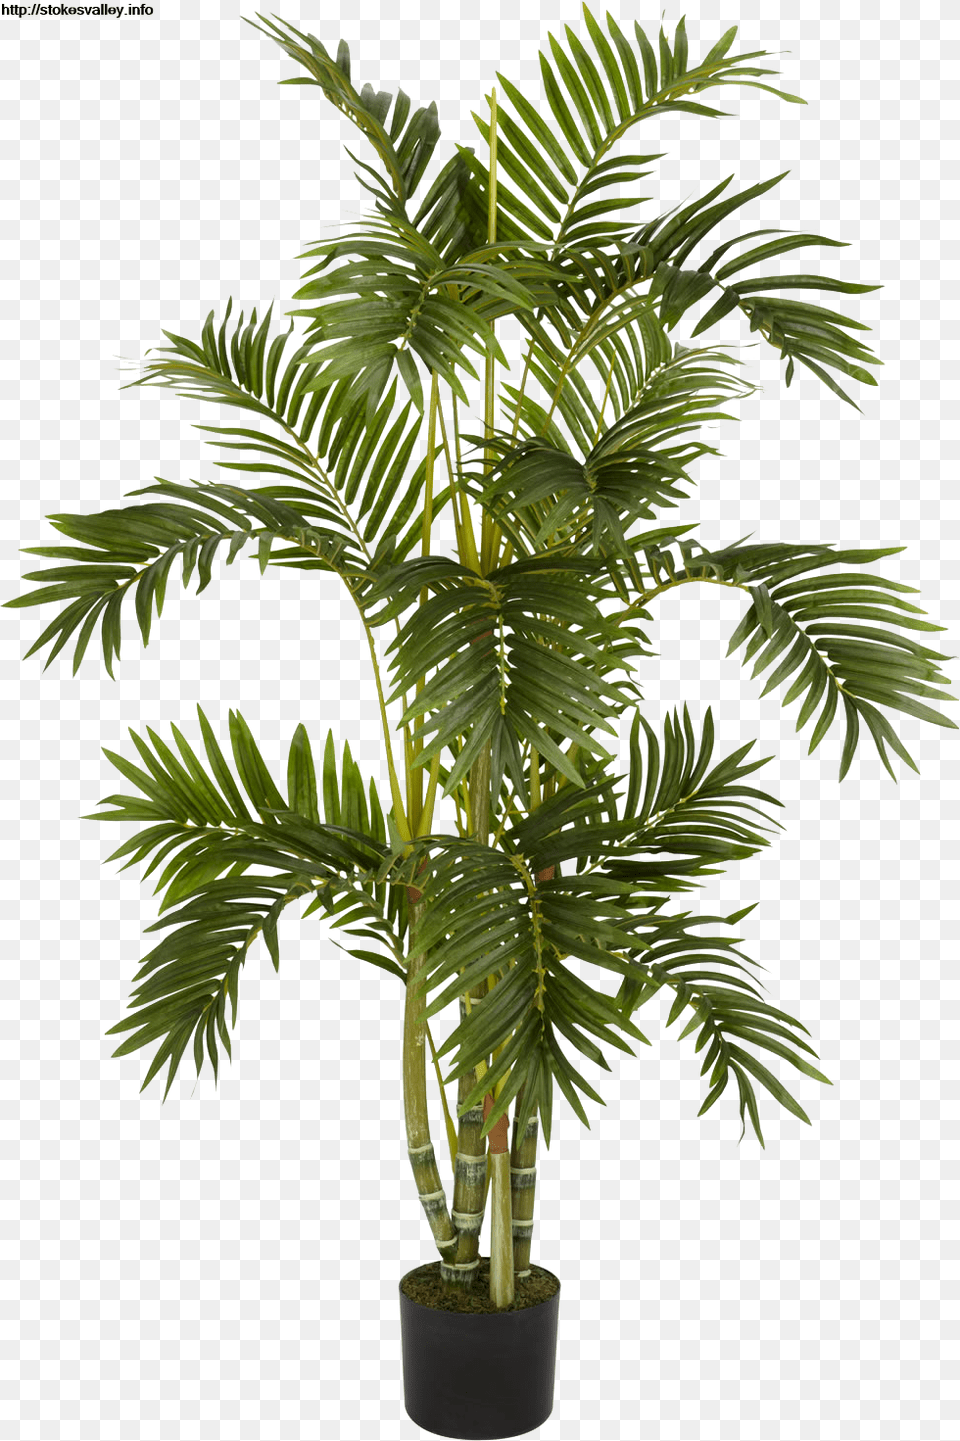 Plants Transparent Free Images Only Best Large Palm Plant Transparent, Leaf, Palm Tree, Tree Png